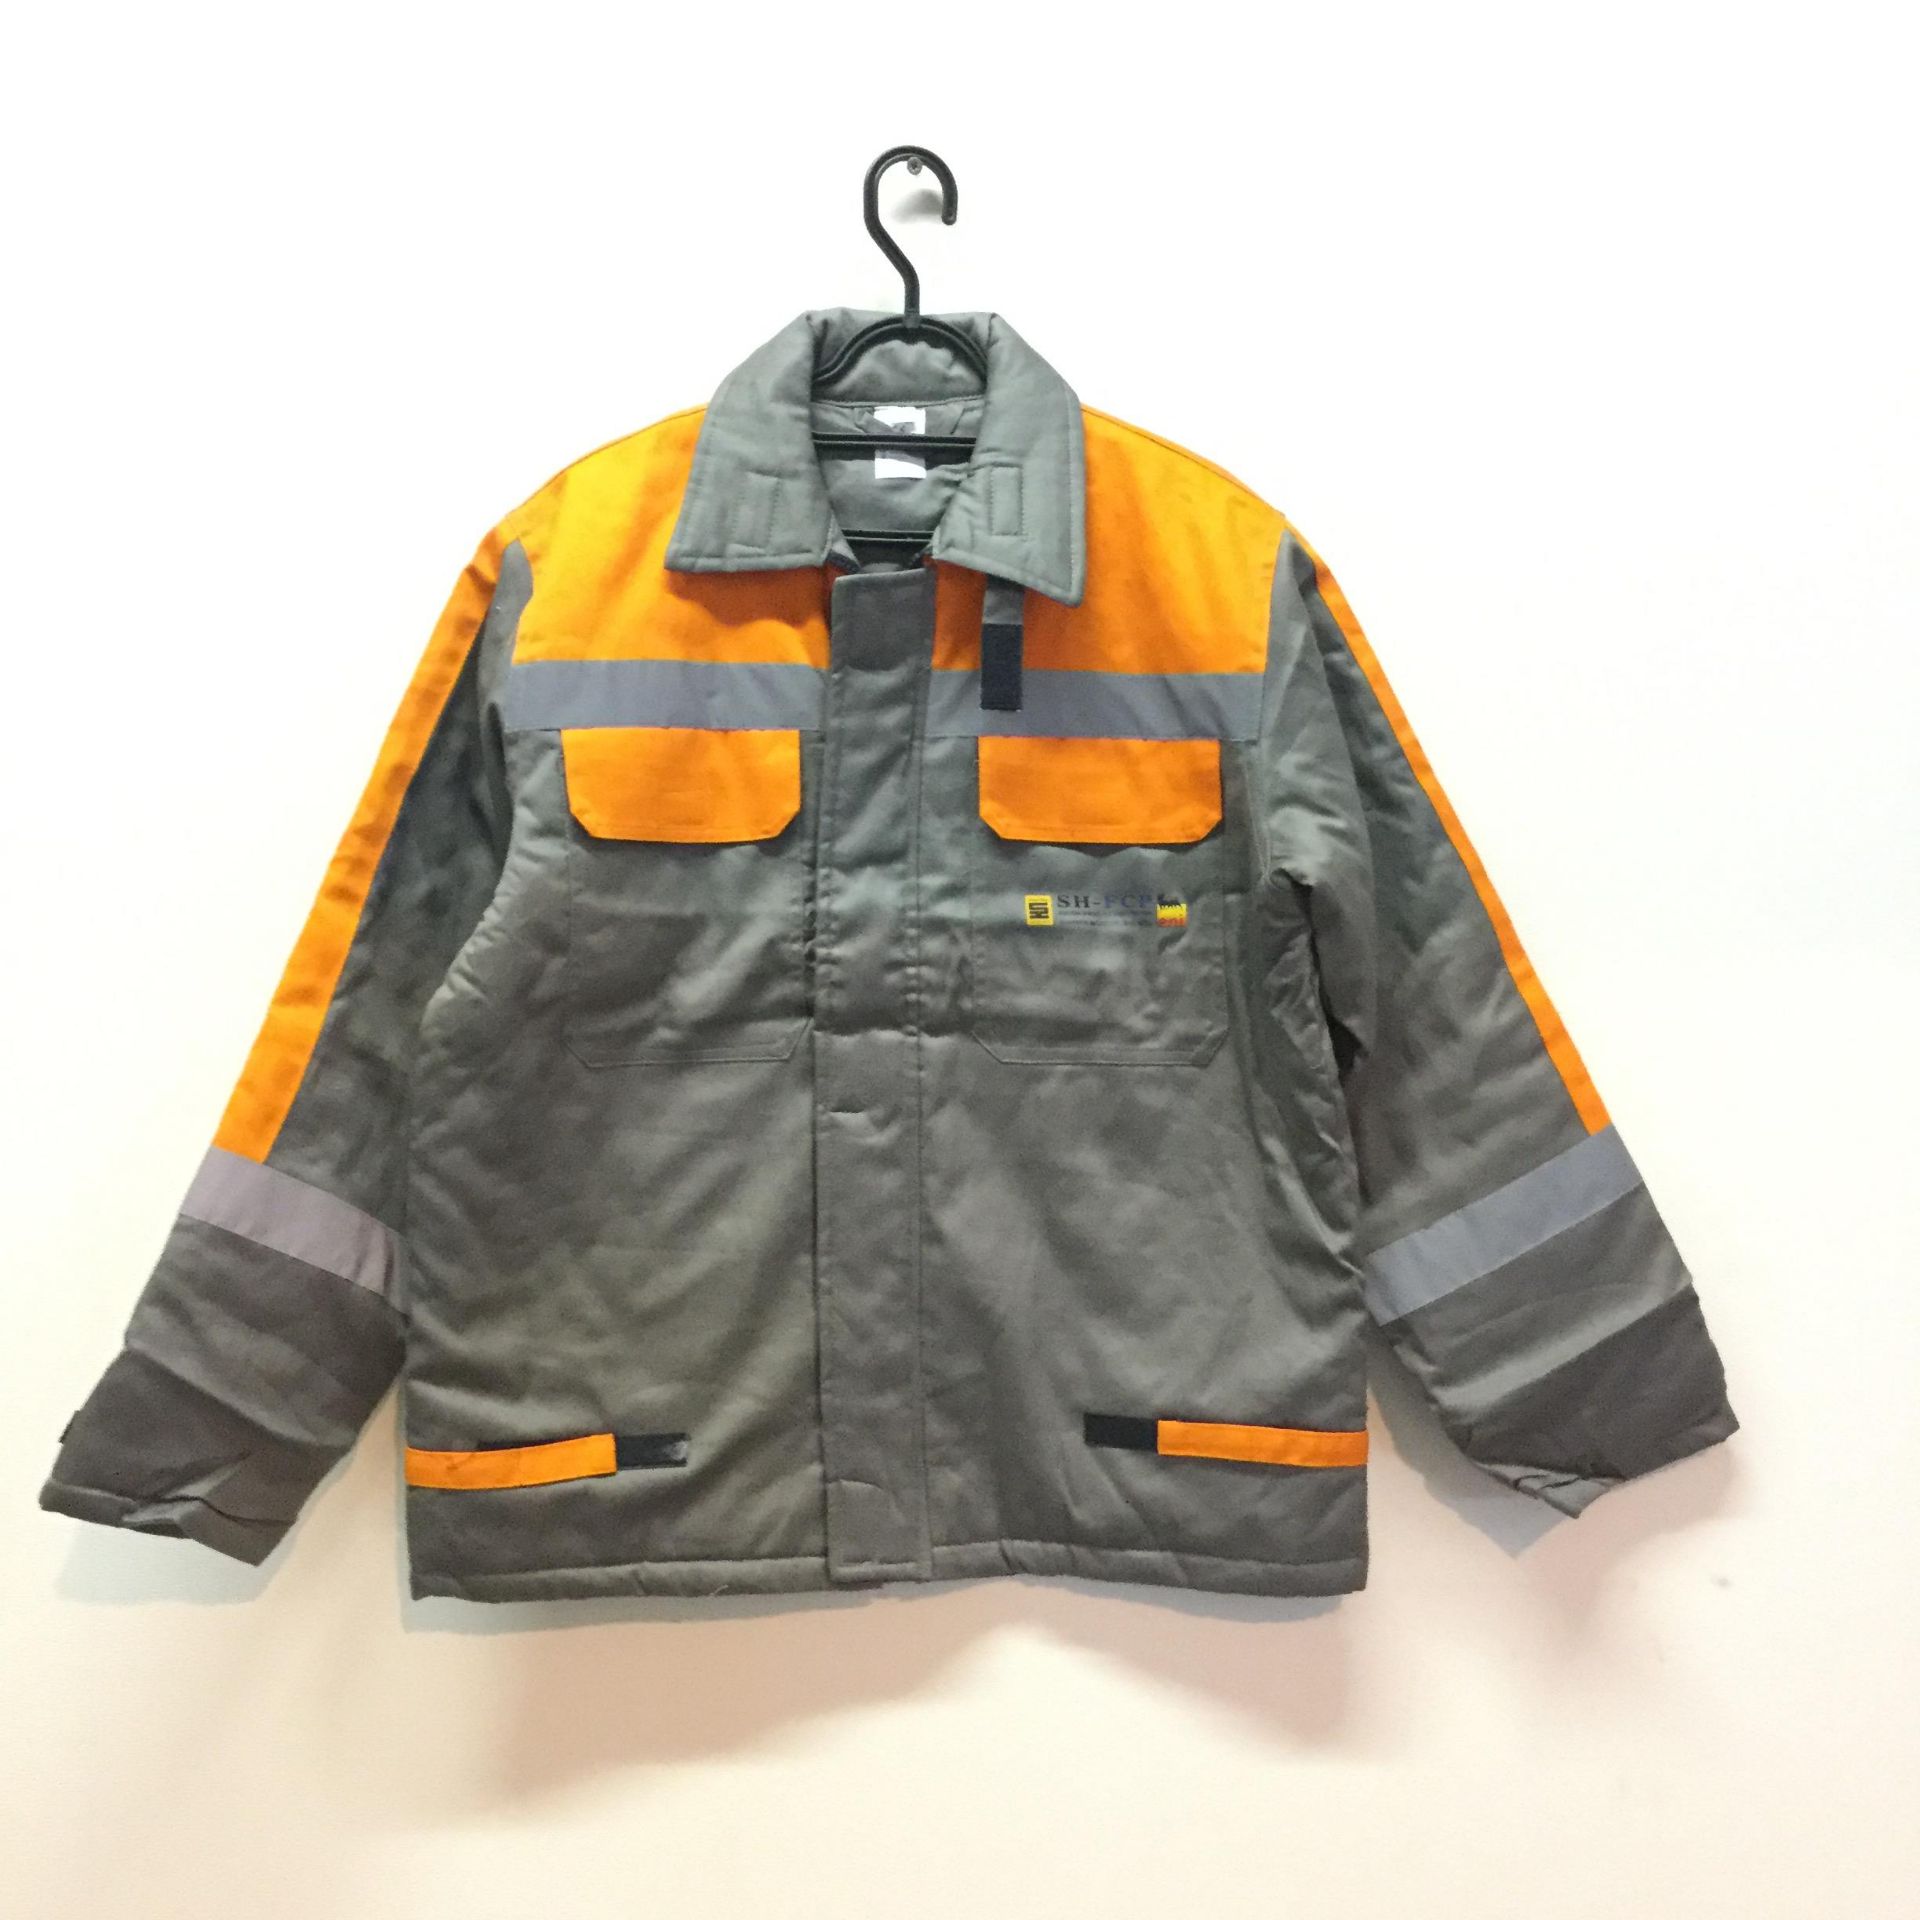 Flame Retardant Winter Jacket - Size 58